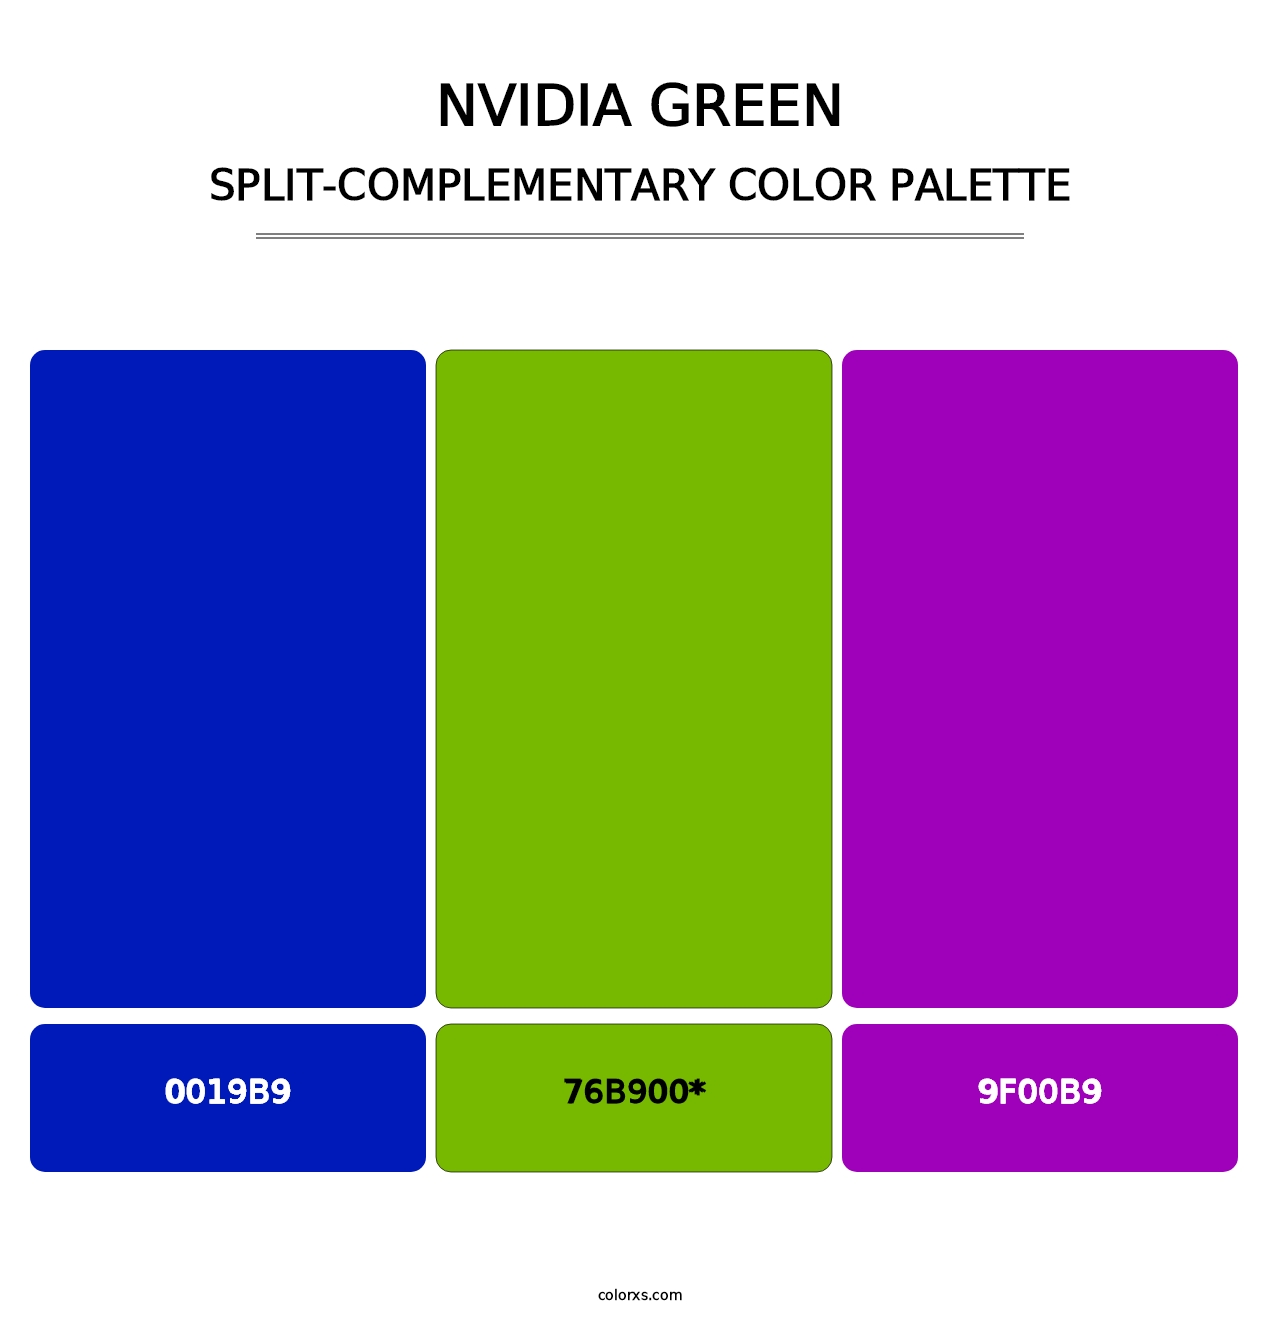 Nvidia Green - Split-Complementary Color Palette